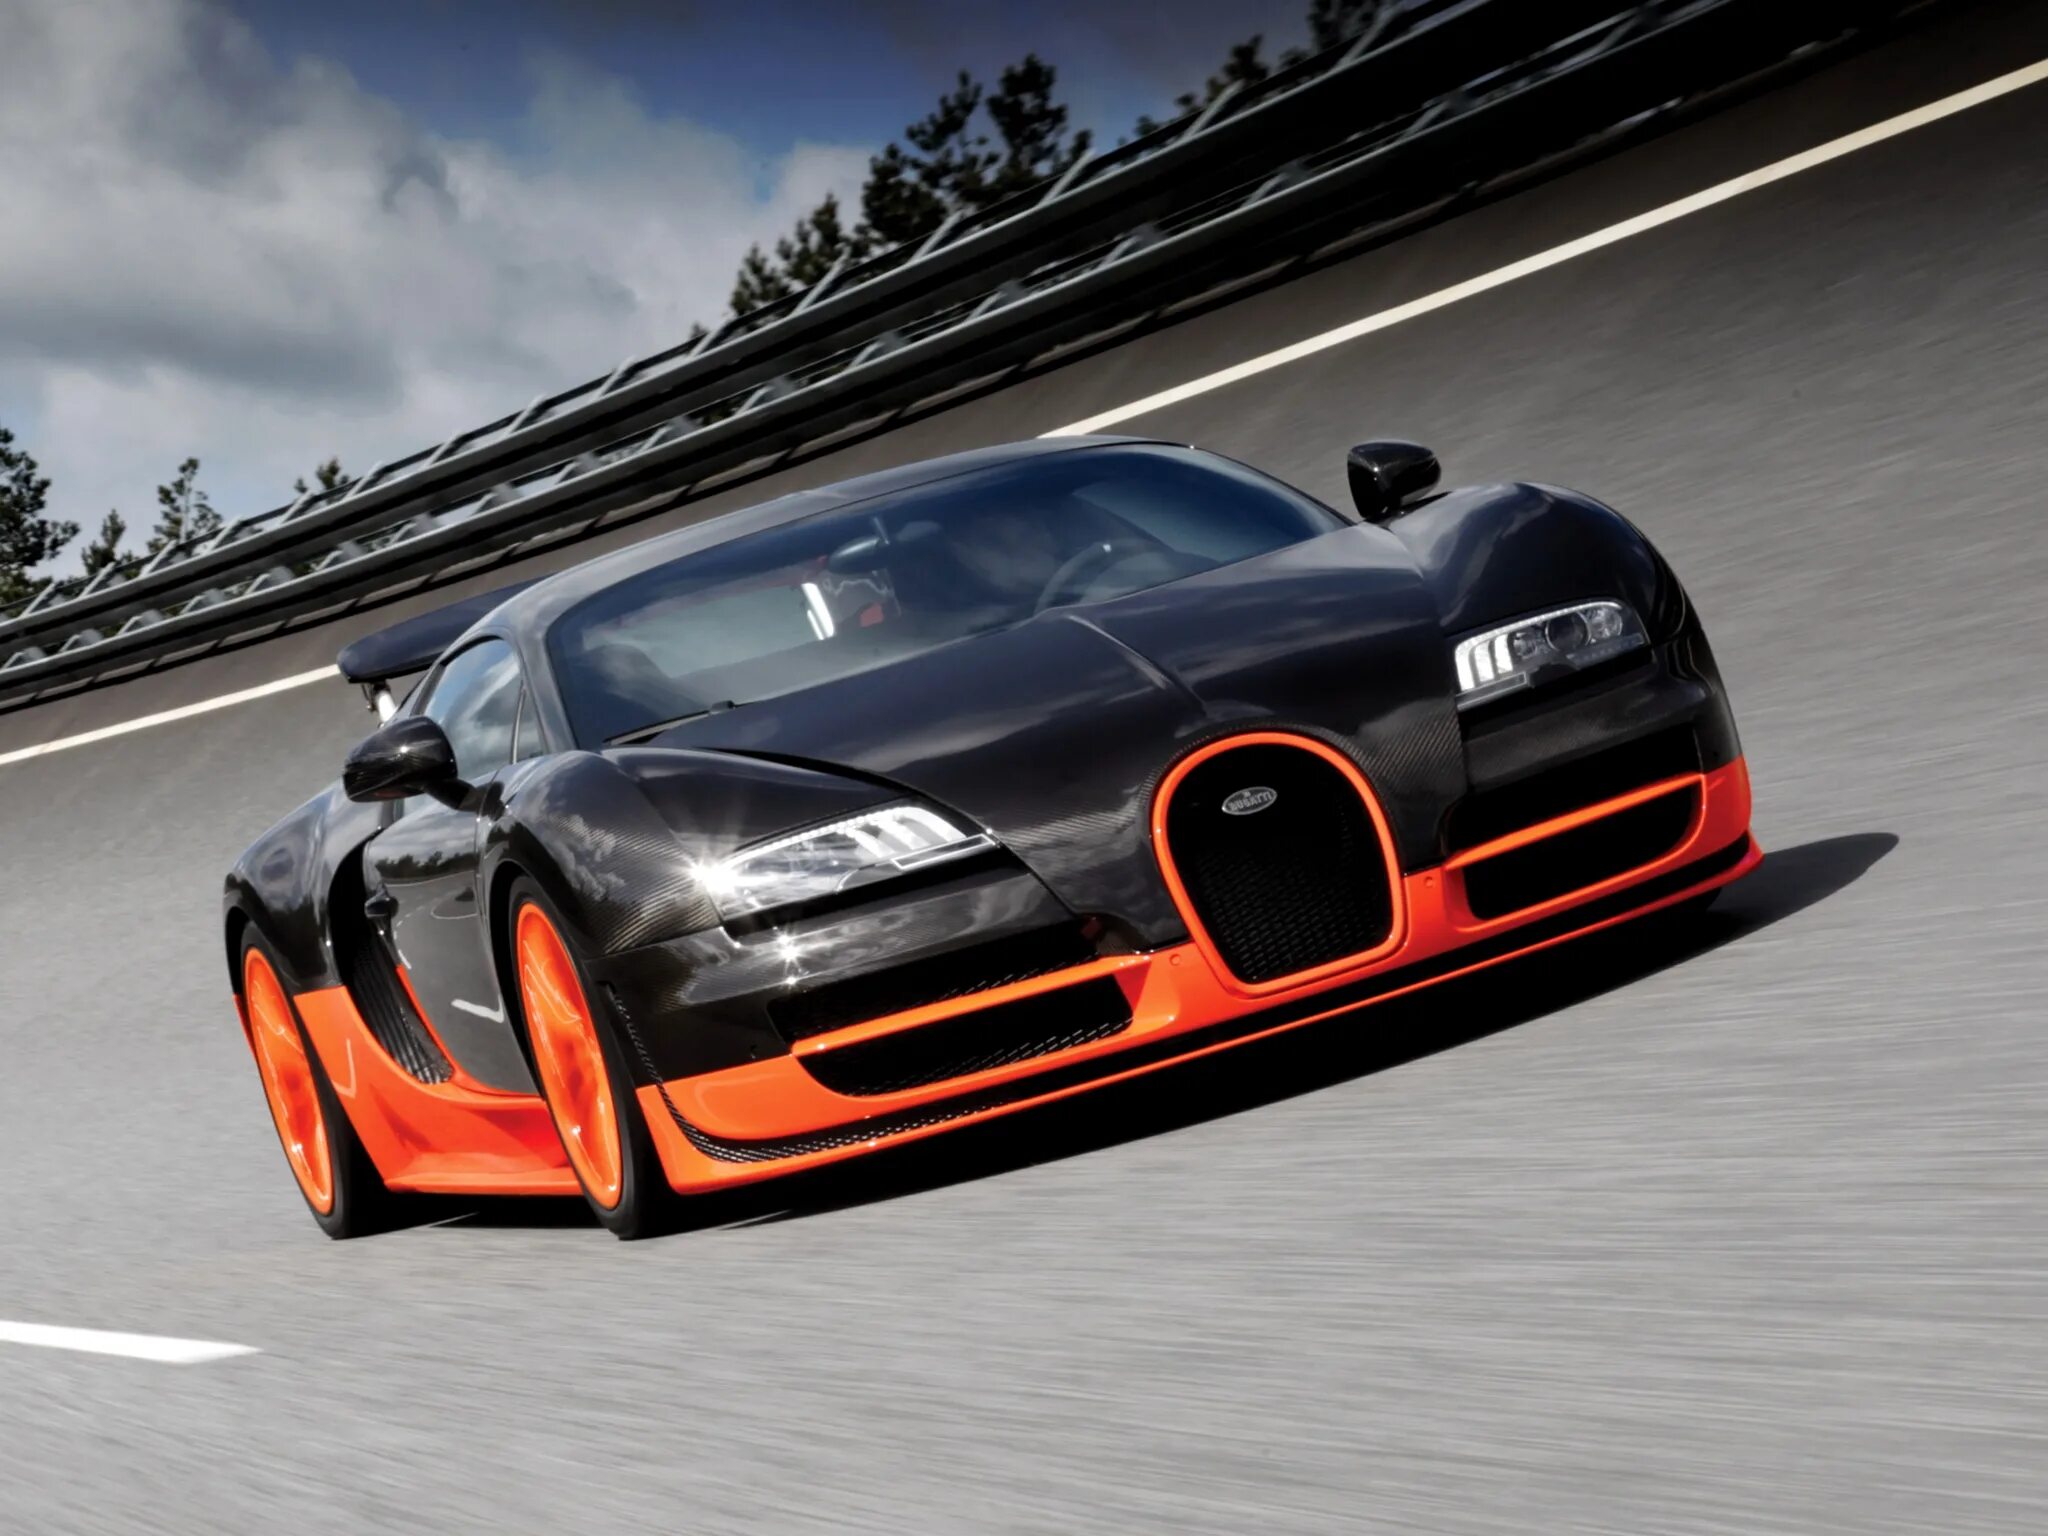 Покажи мне машины. Бугатти Вейрон 16 4 super Sport. Машина Bugatti Veyron 16.4 Supersport. Bugatti Veyron 16.4 super Sport 2010. Bugatti Veyron Supersport.